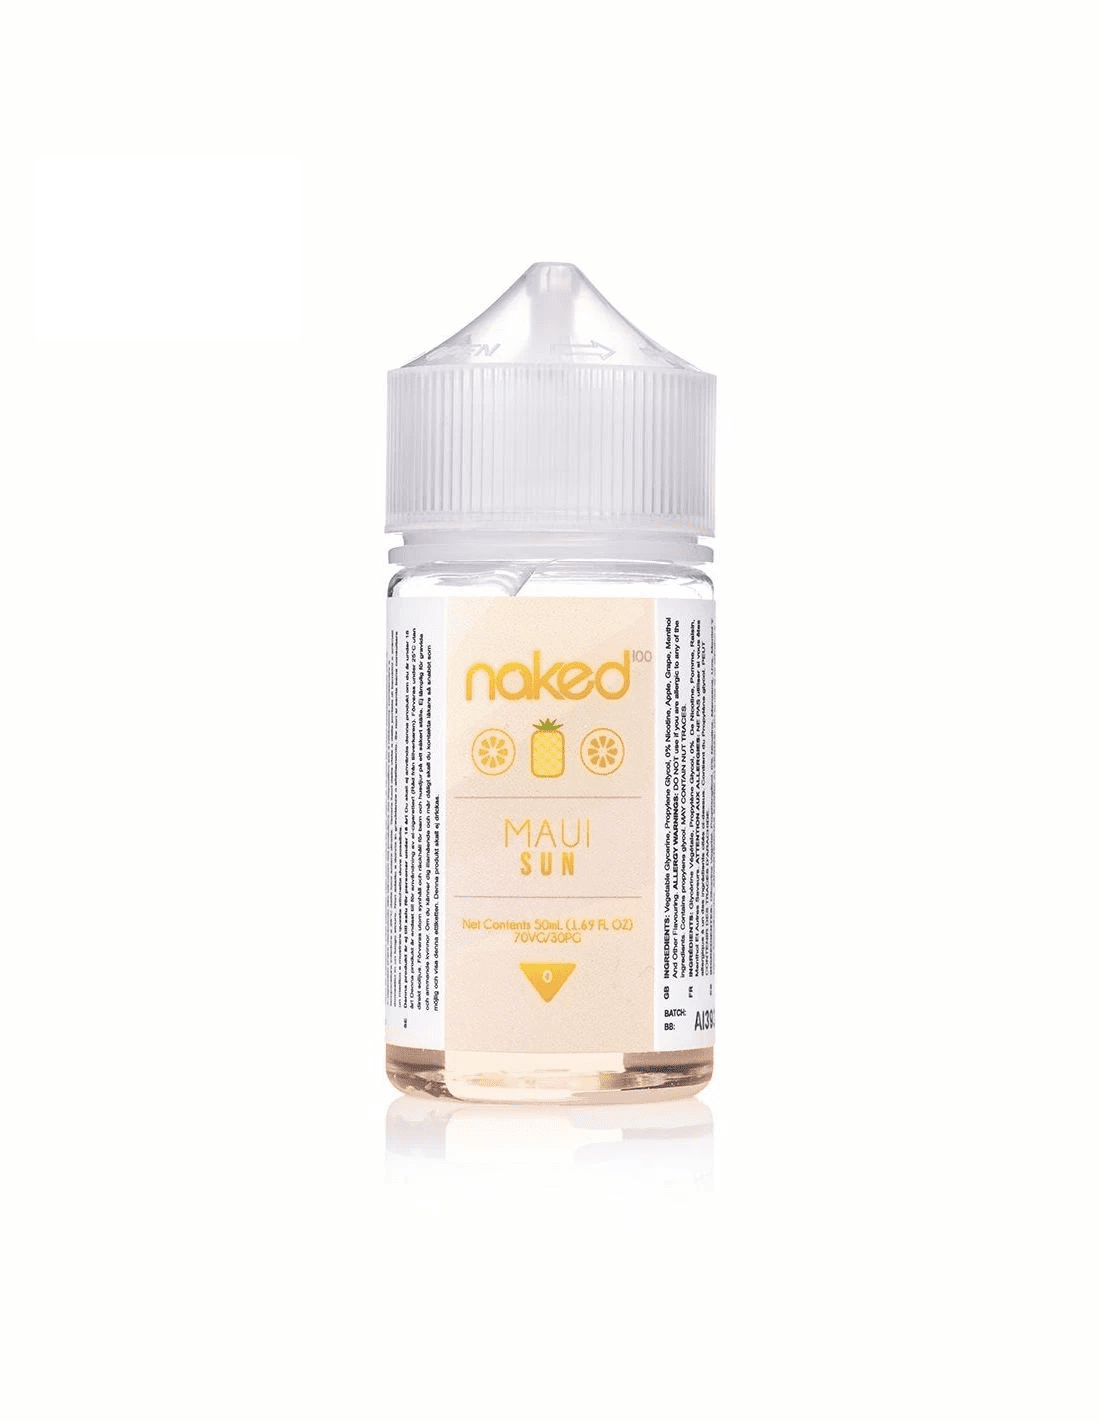  Naked 100 - Maui Sun - 50ml 